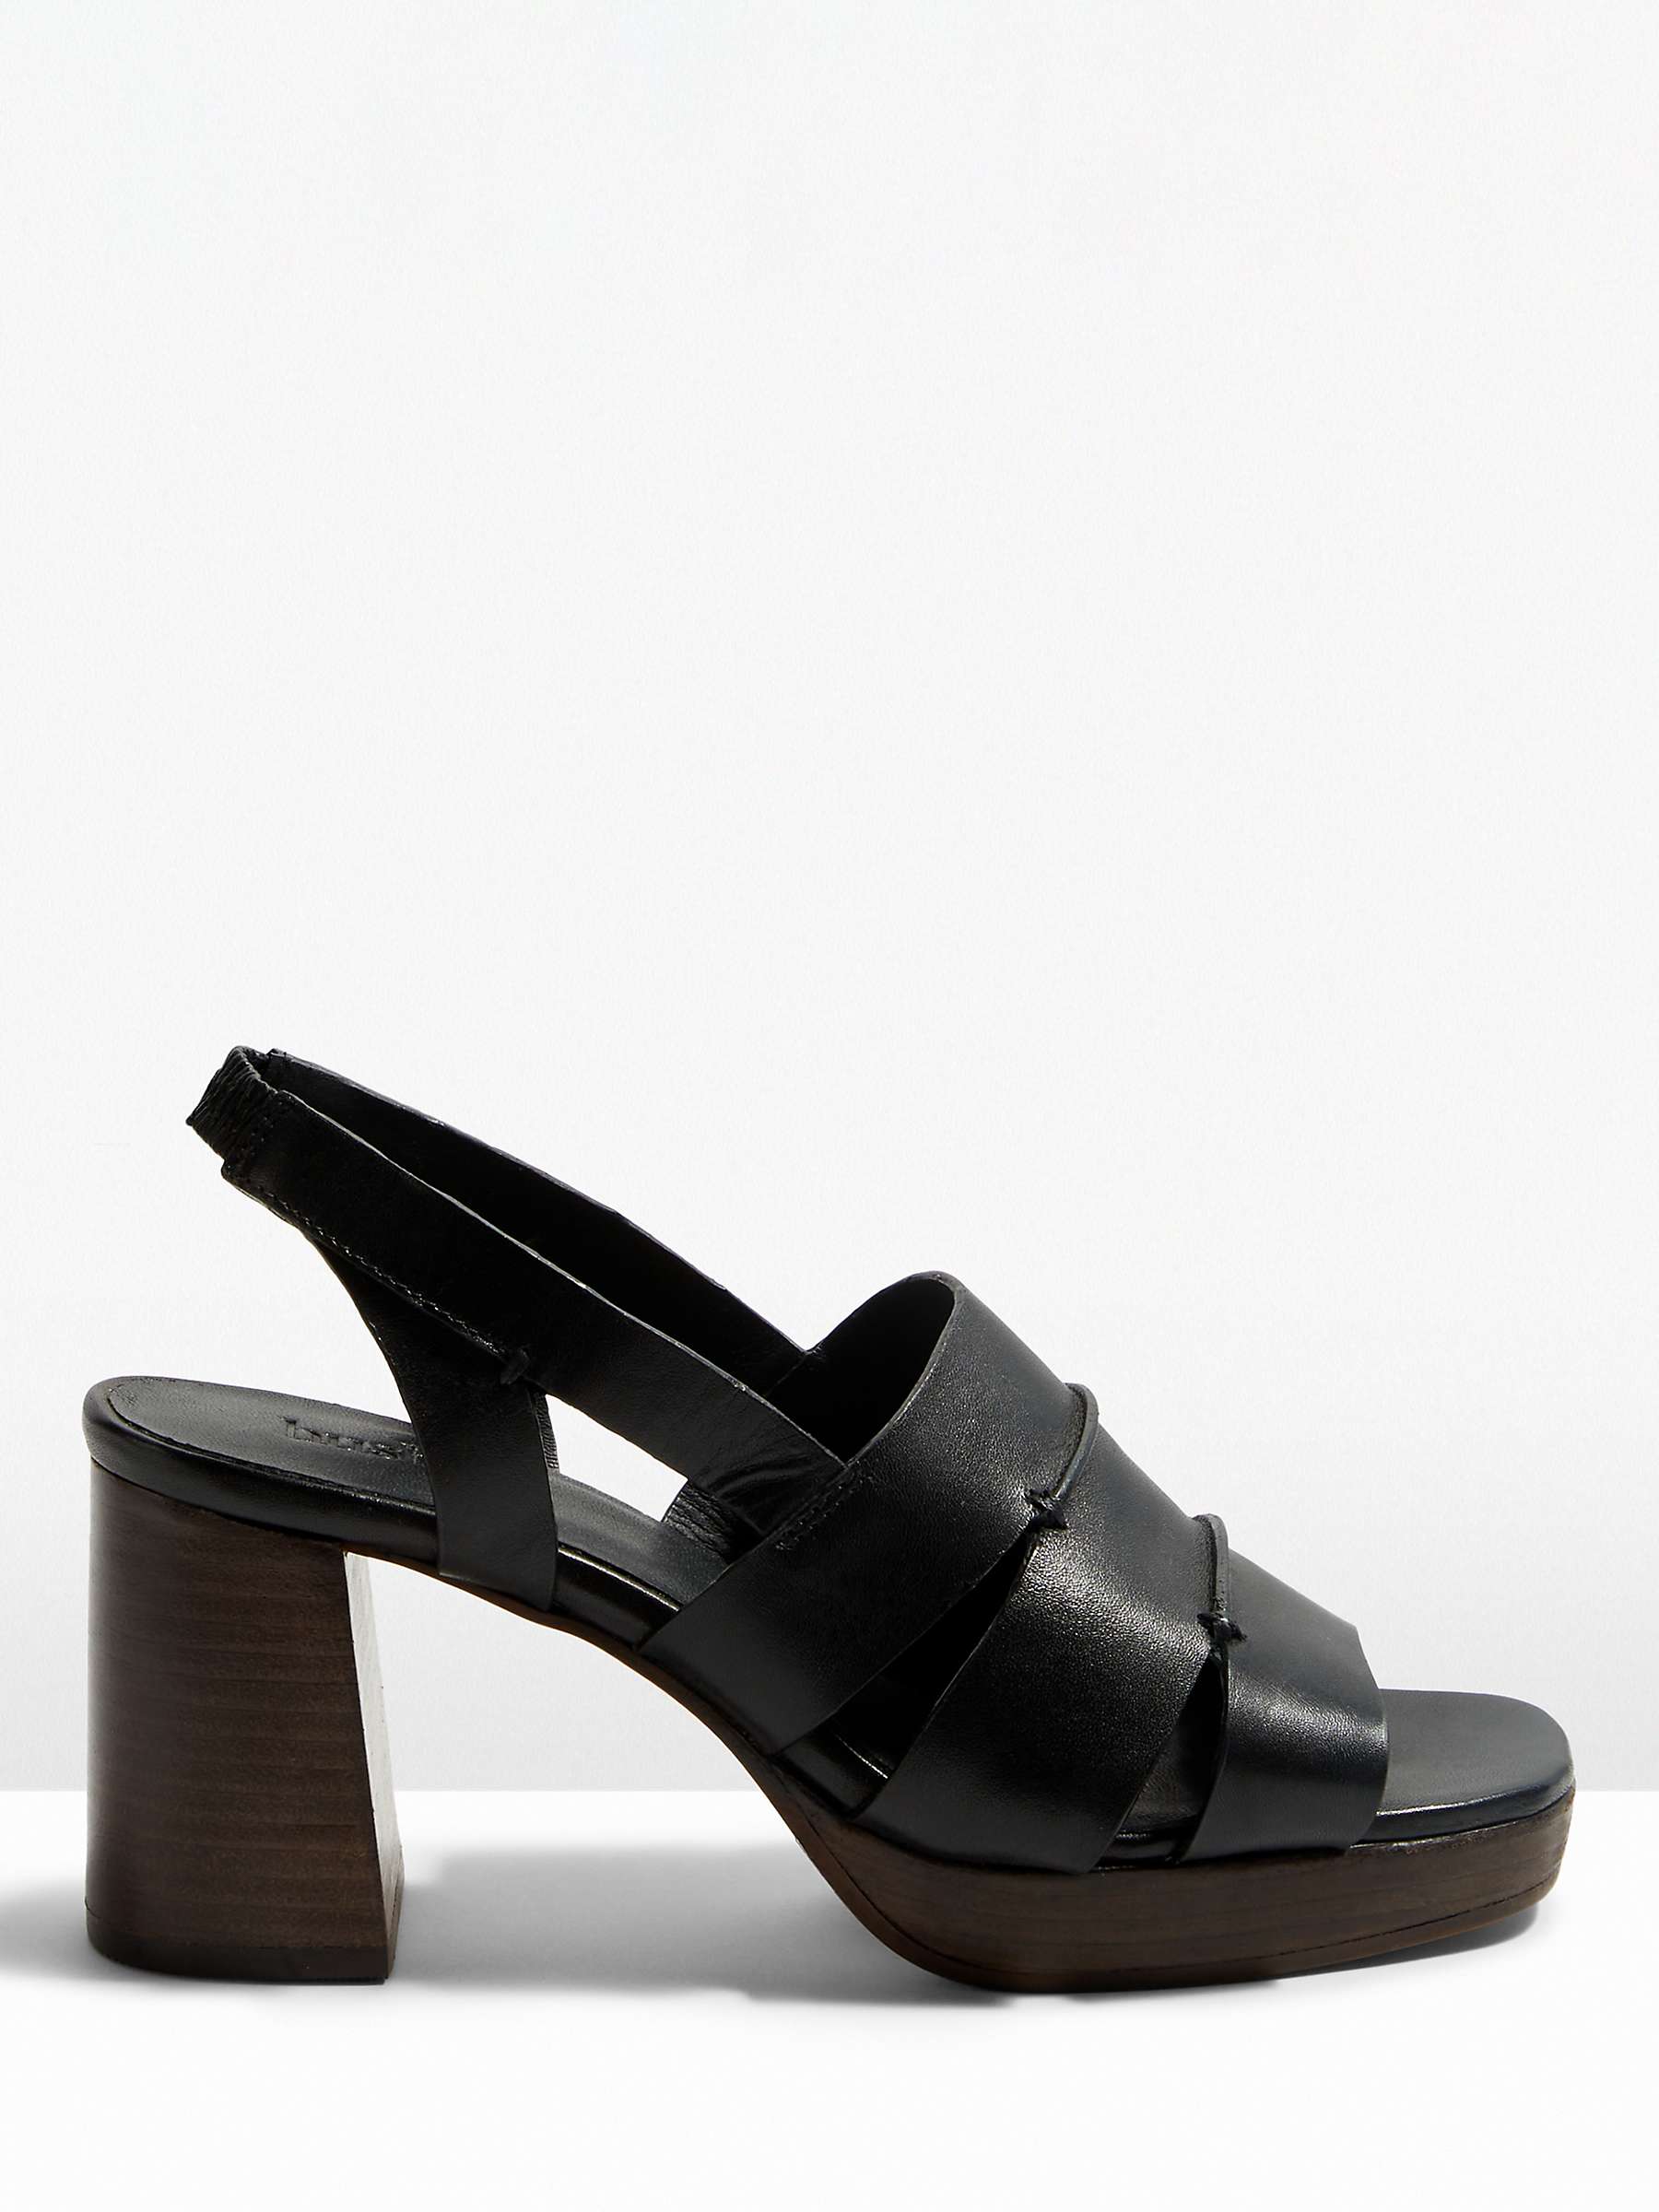 HUSH Fiona Leather Platform Sandals, Black at John Lewis & Partners